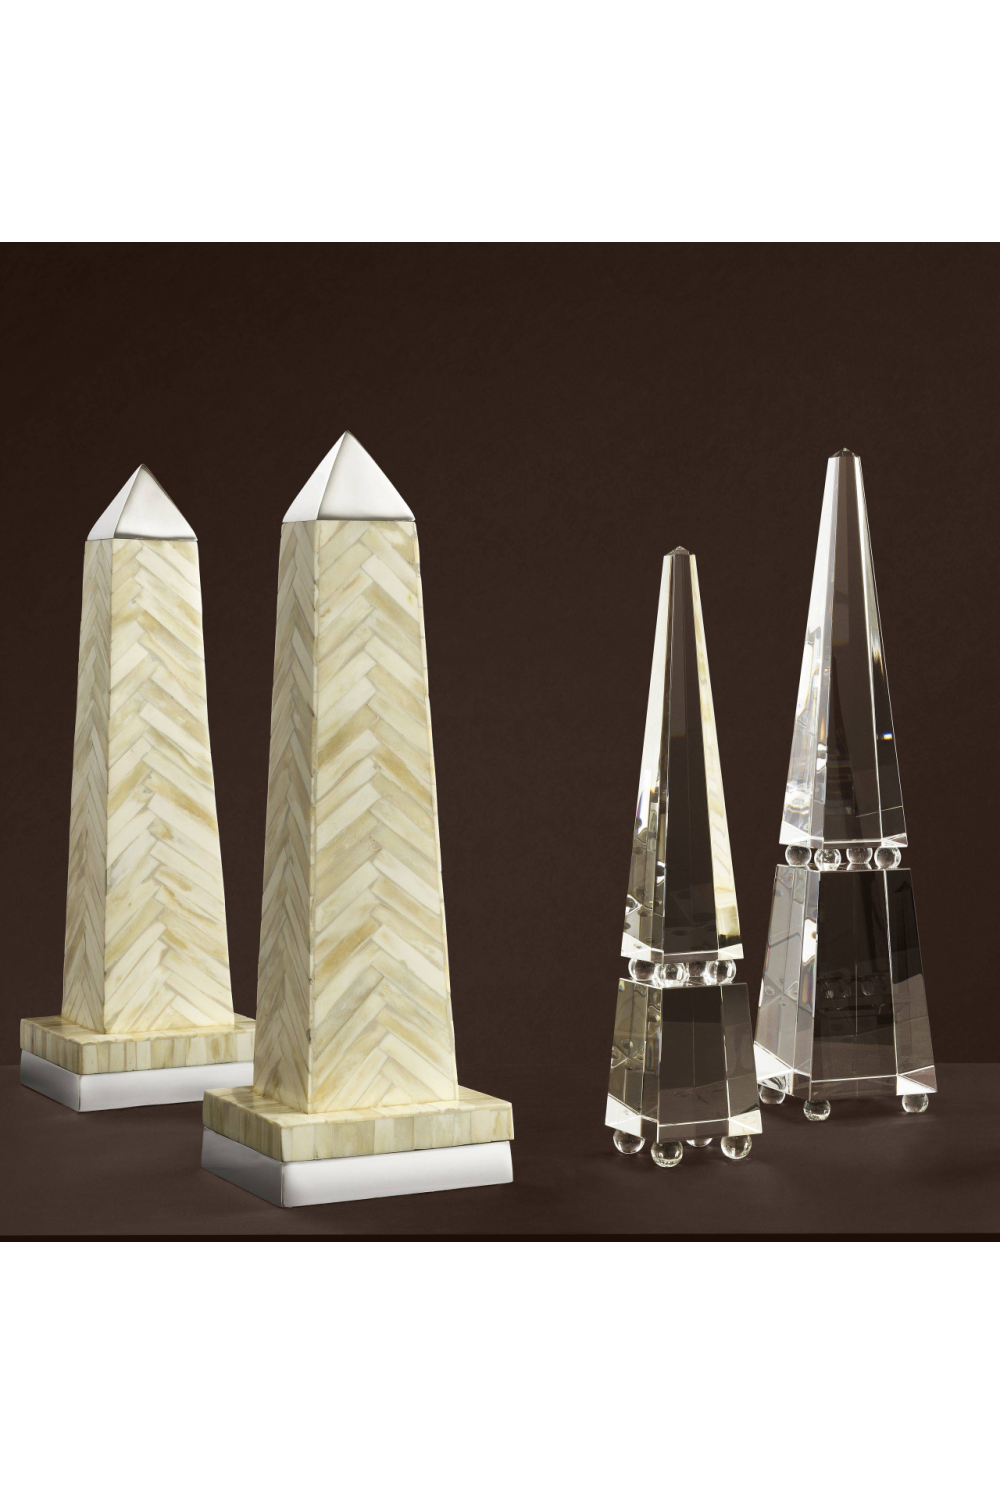 Crystal Obelisk - S | Eichholtz Bari | OROA